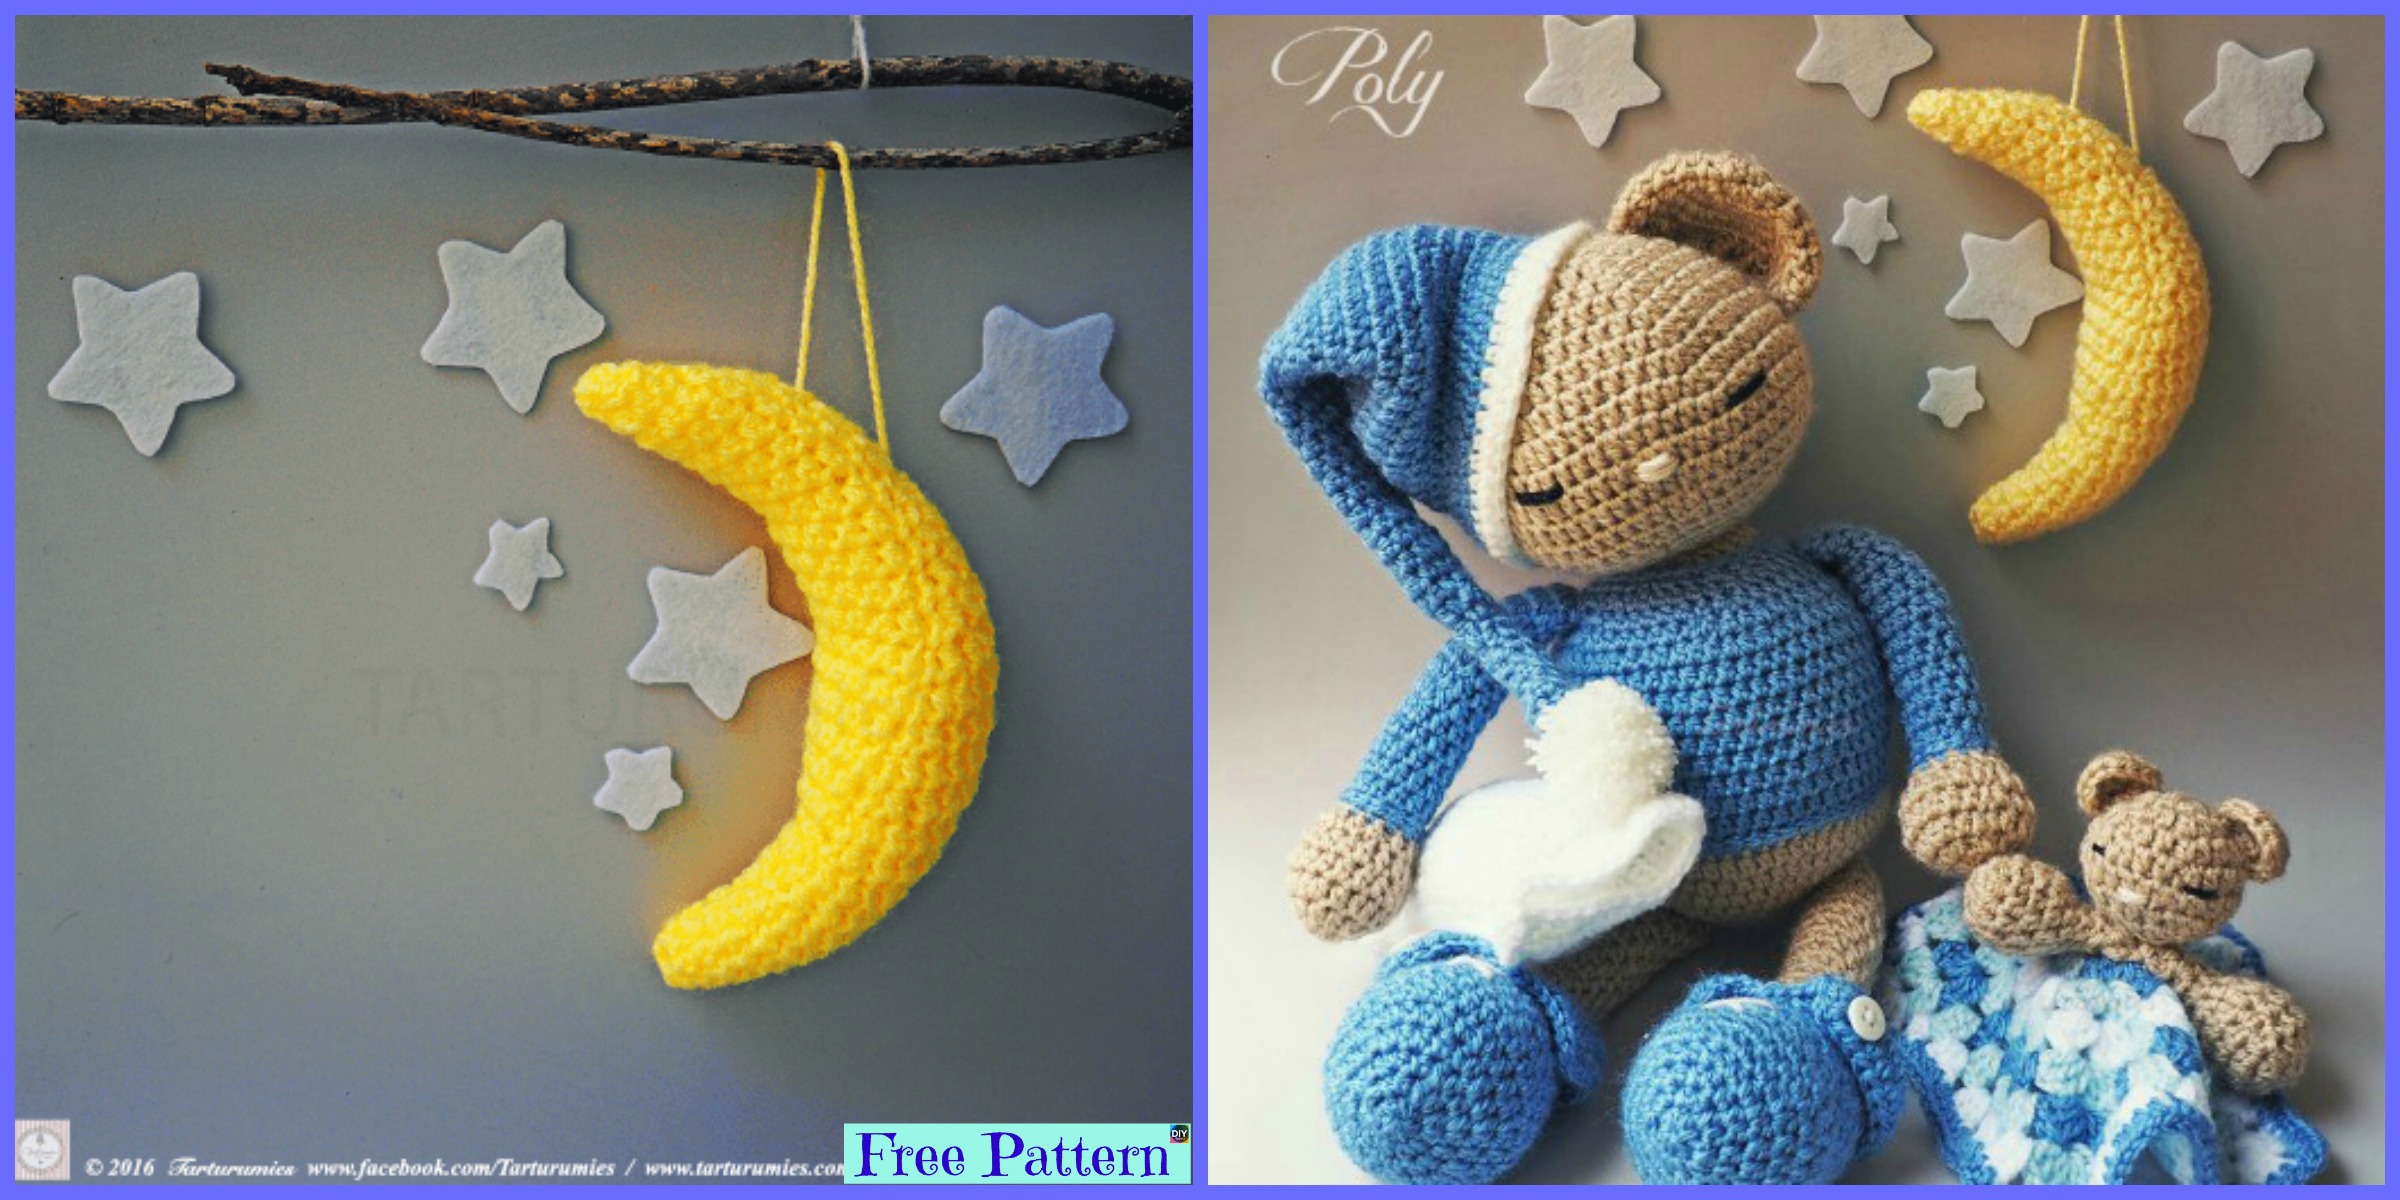 Crochet-Amigurumi-Teddy-Bear-Poly-Free-Pattern